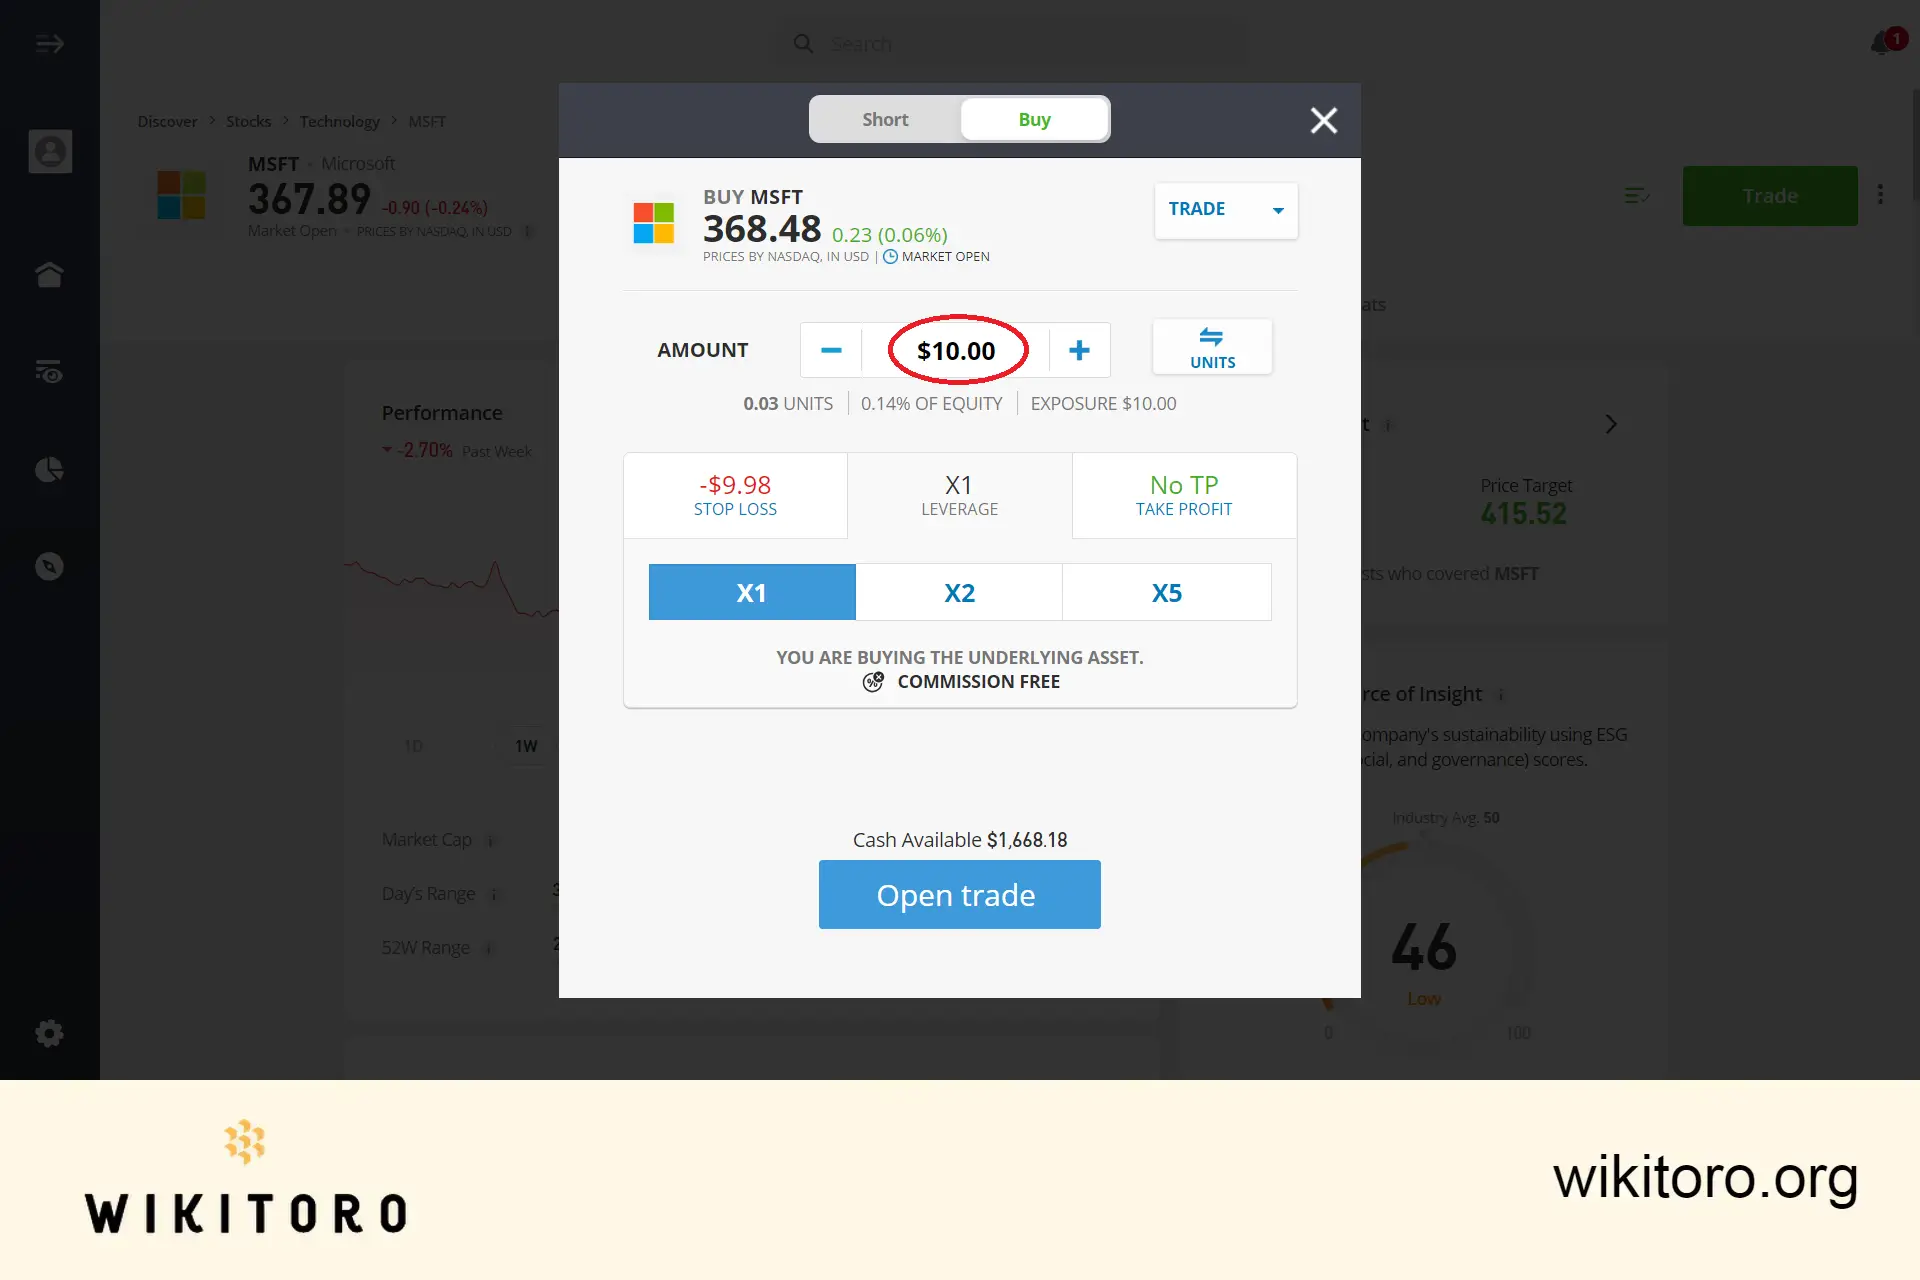 Entering Microsoft stocks investment amount on eToro